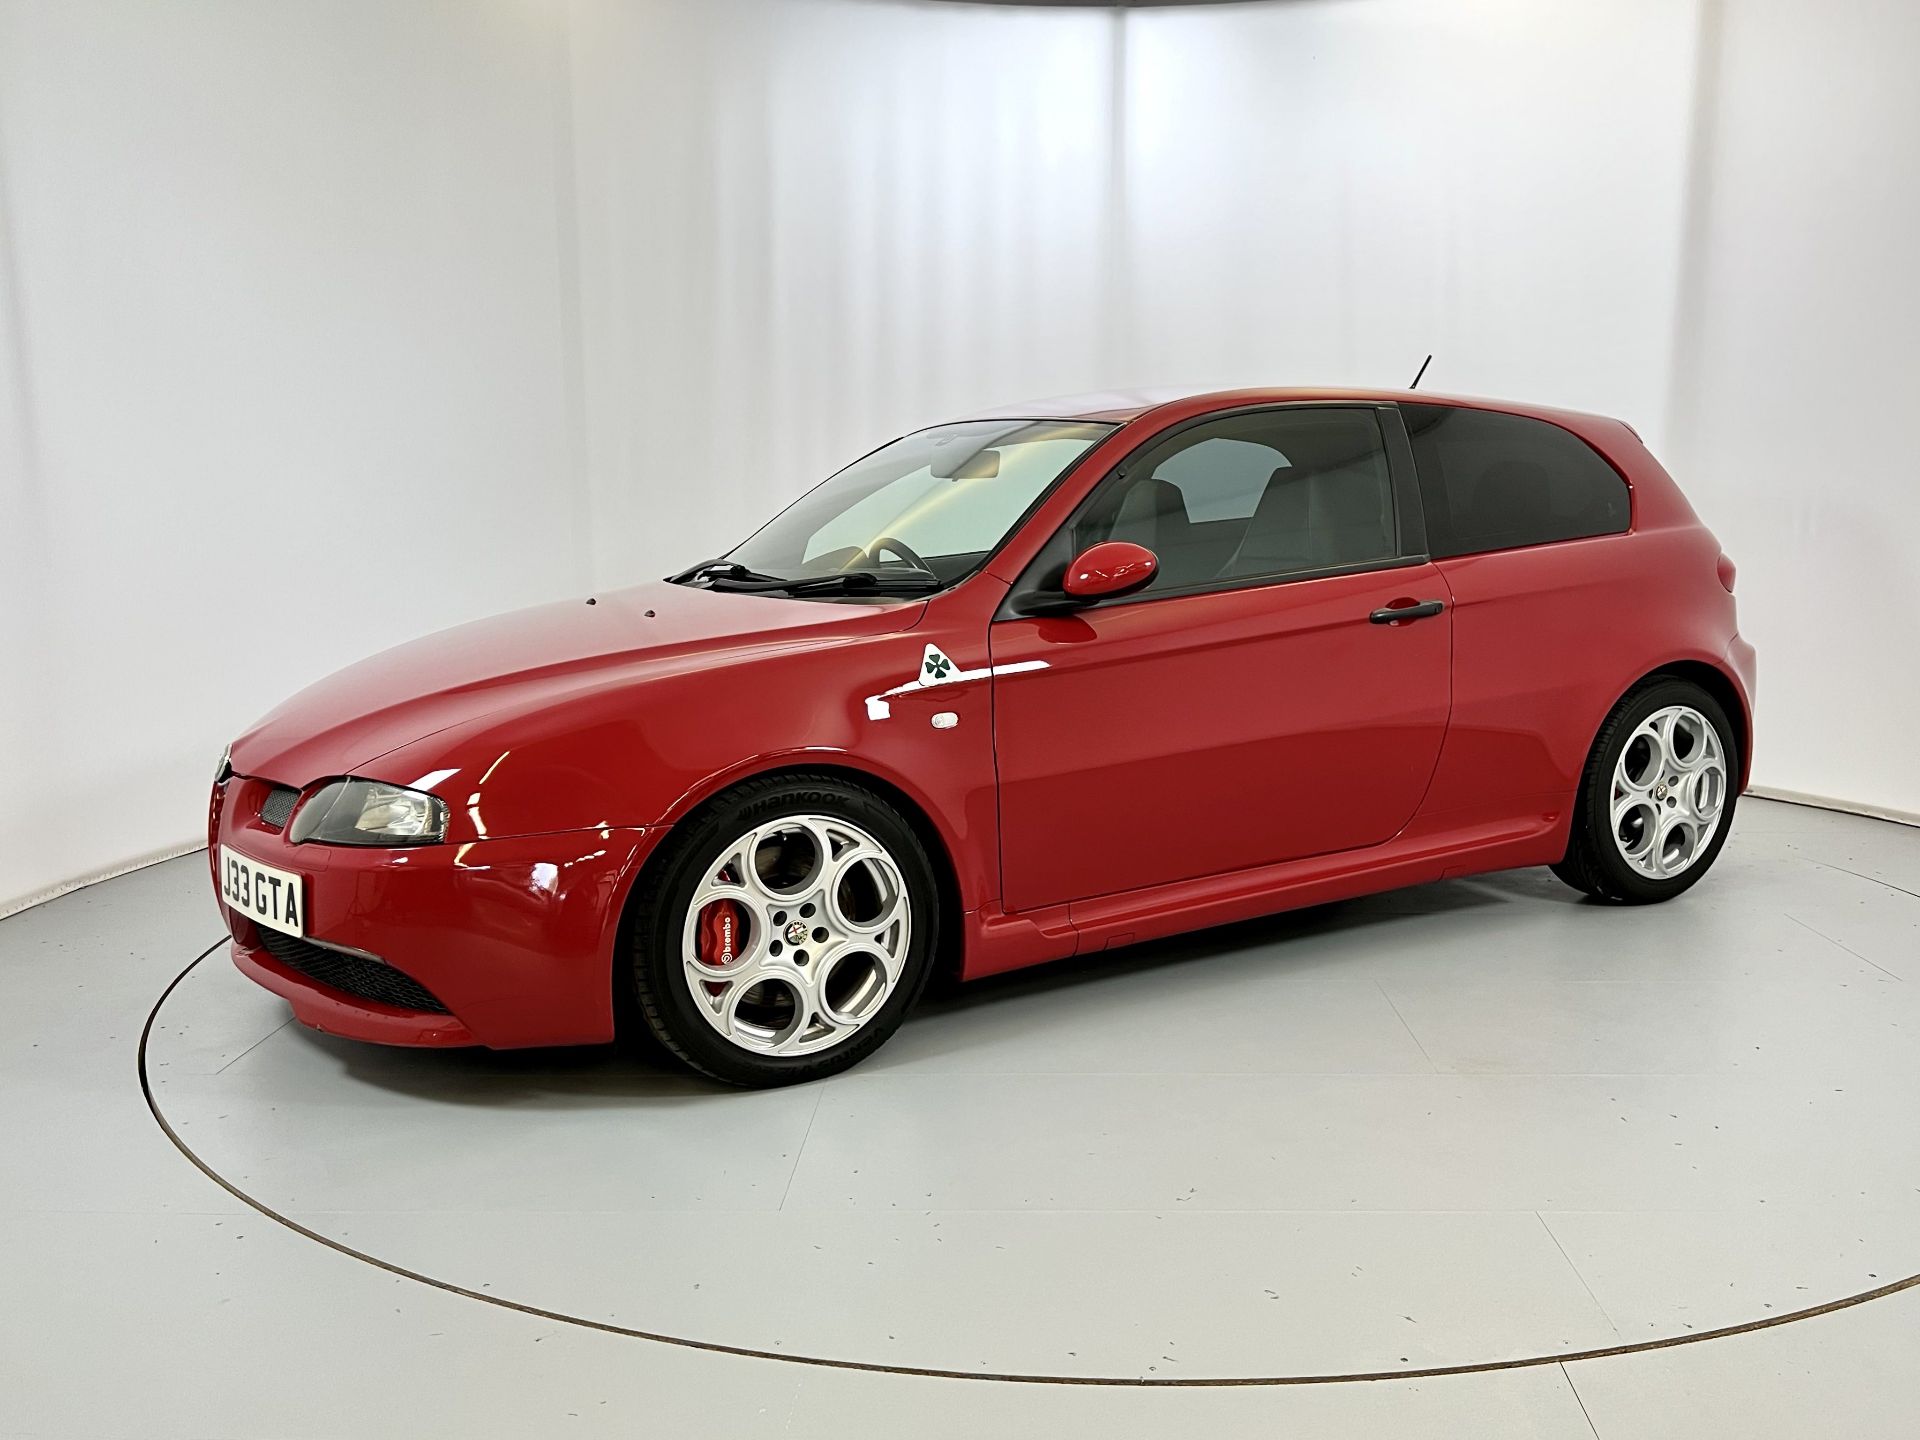 Alfa Romeo 147 GTA - Image 4 of 31